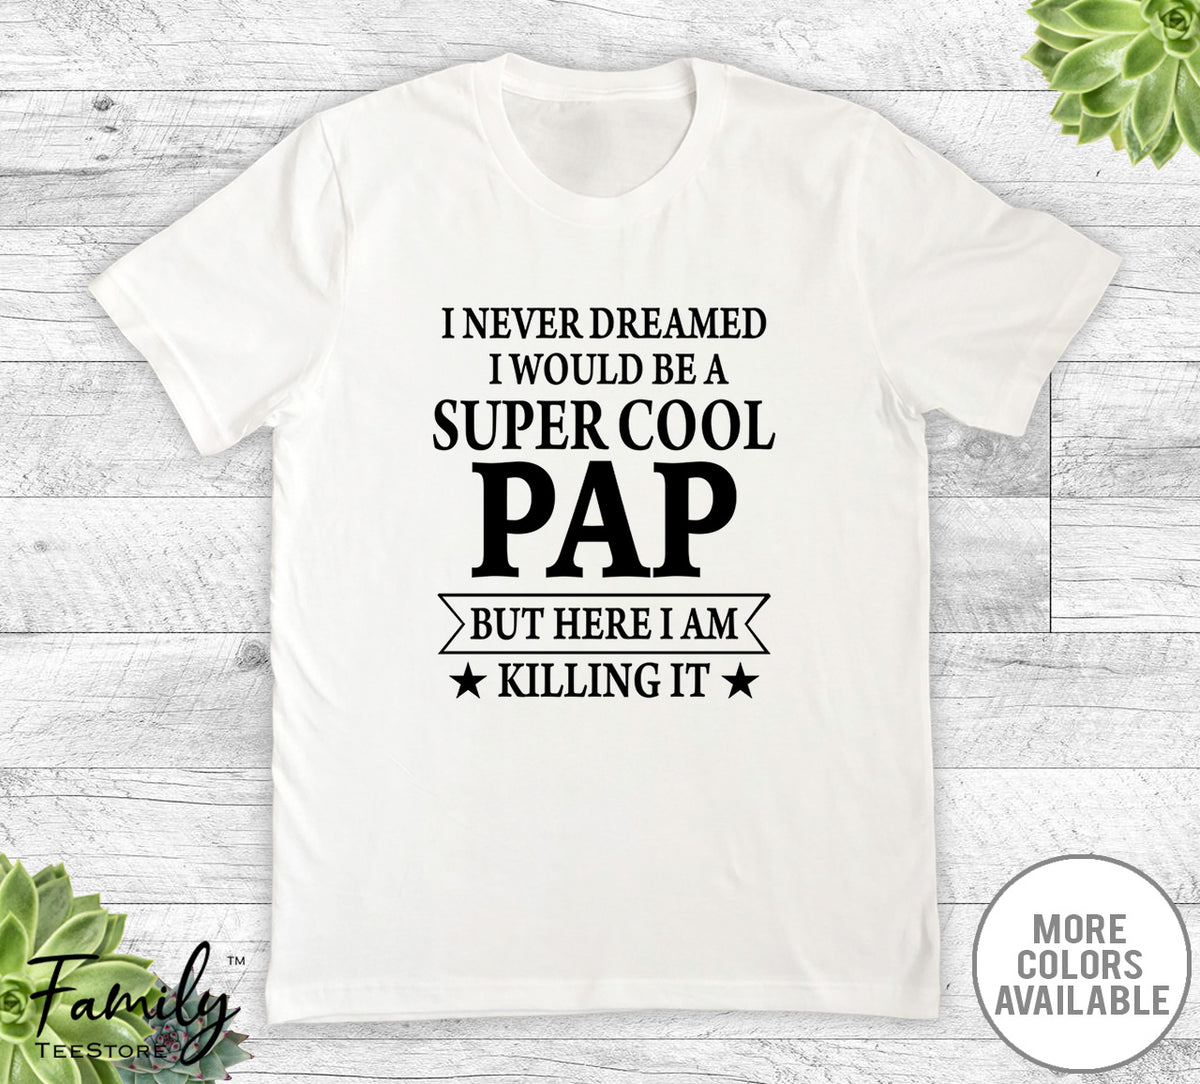 I Never Dreamed I'd Be A Super Cool Pap - Unisex T-shirt - Pap Shirt - Pap Gift